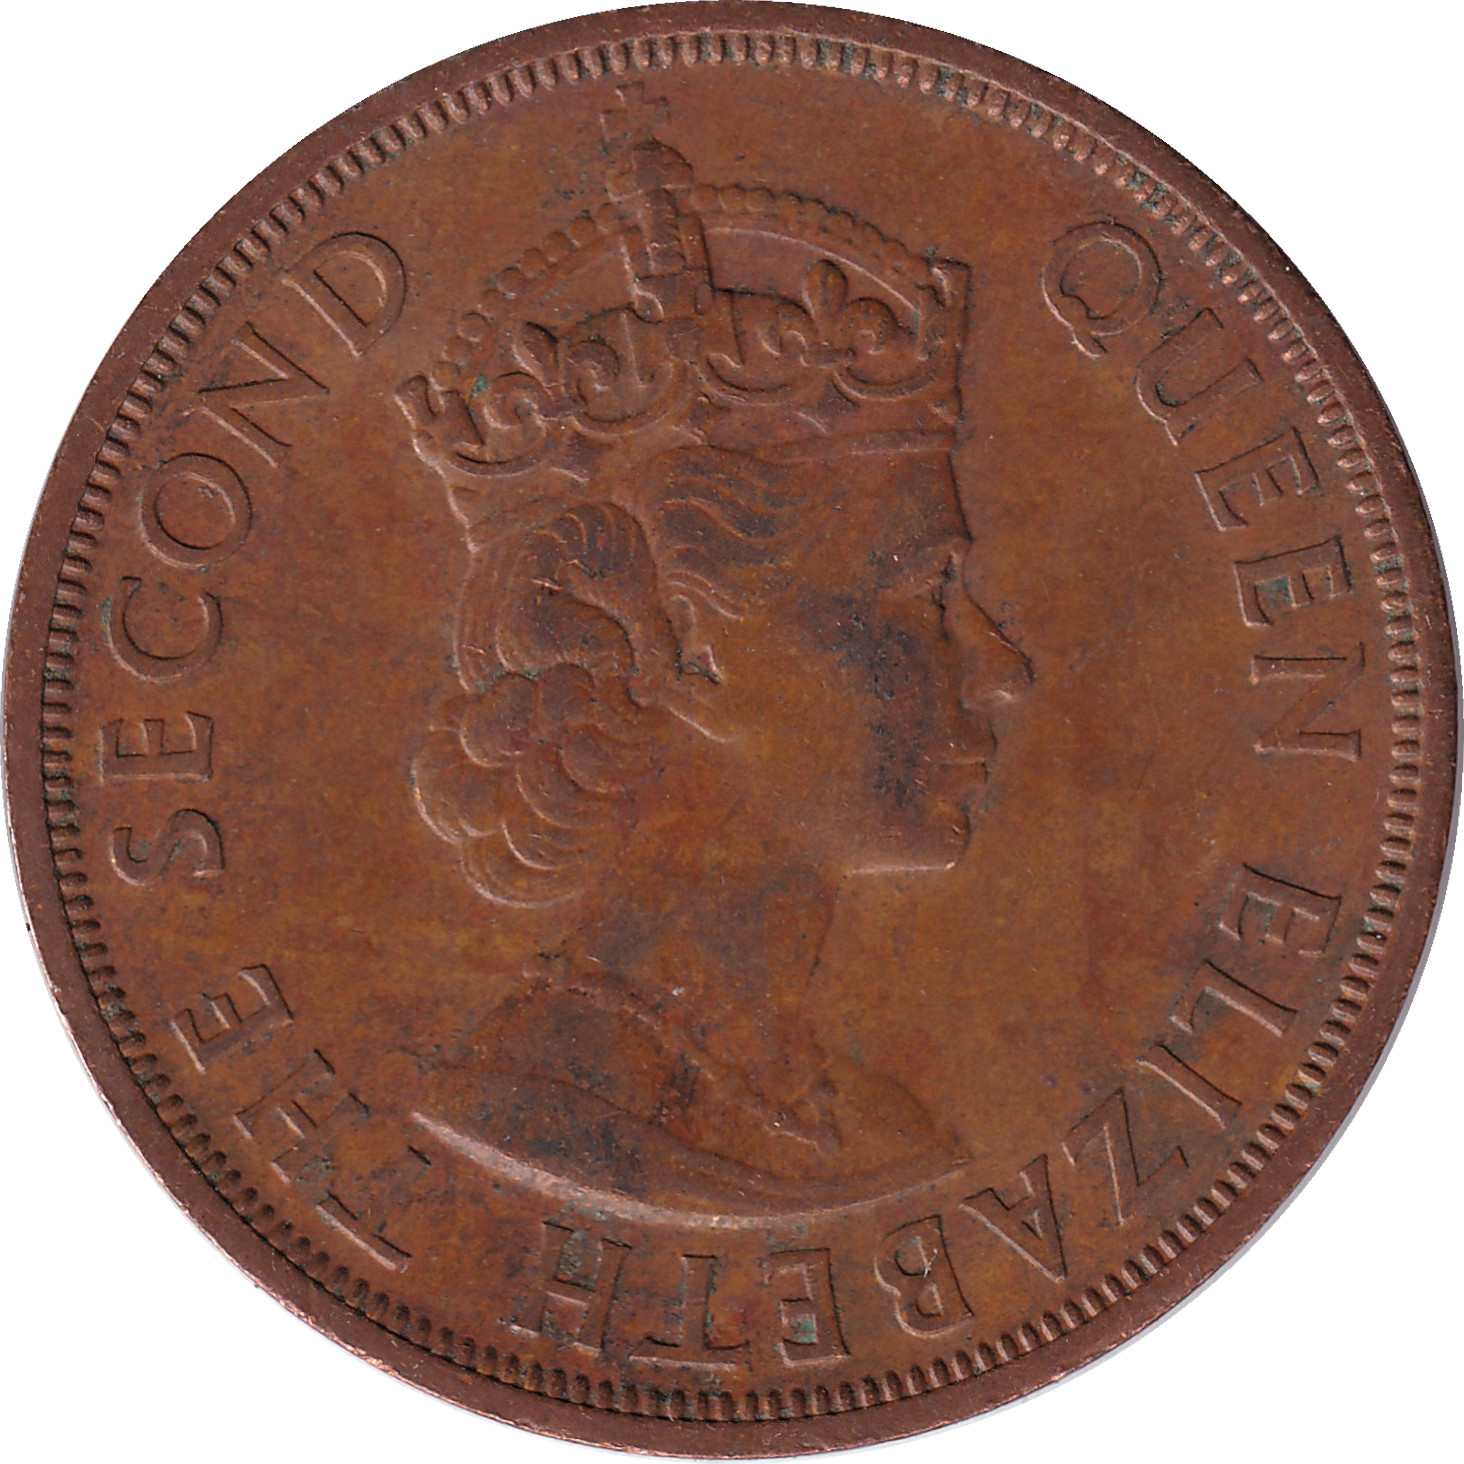 2 cents - Elizabeth II